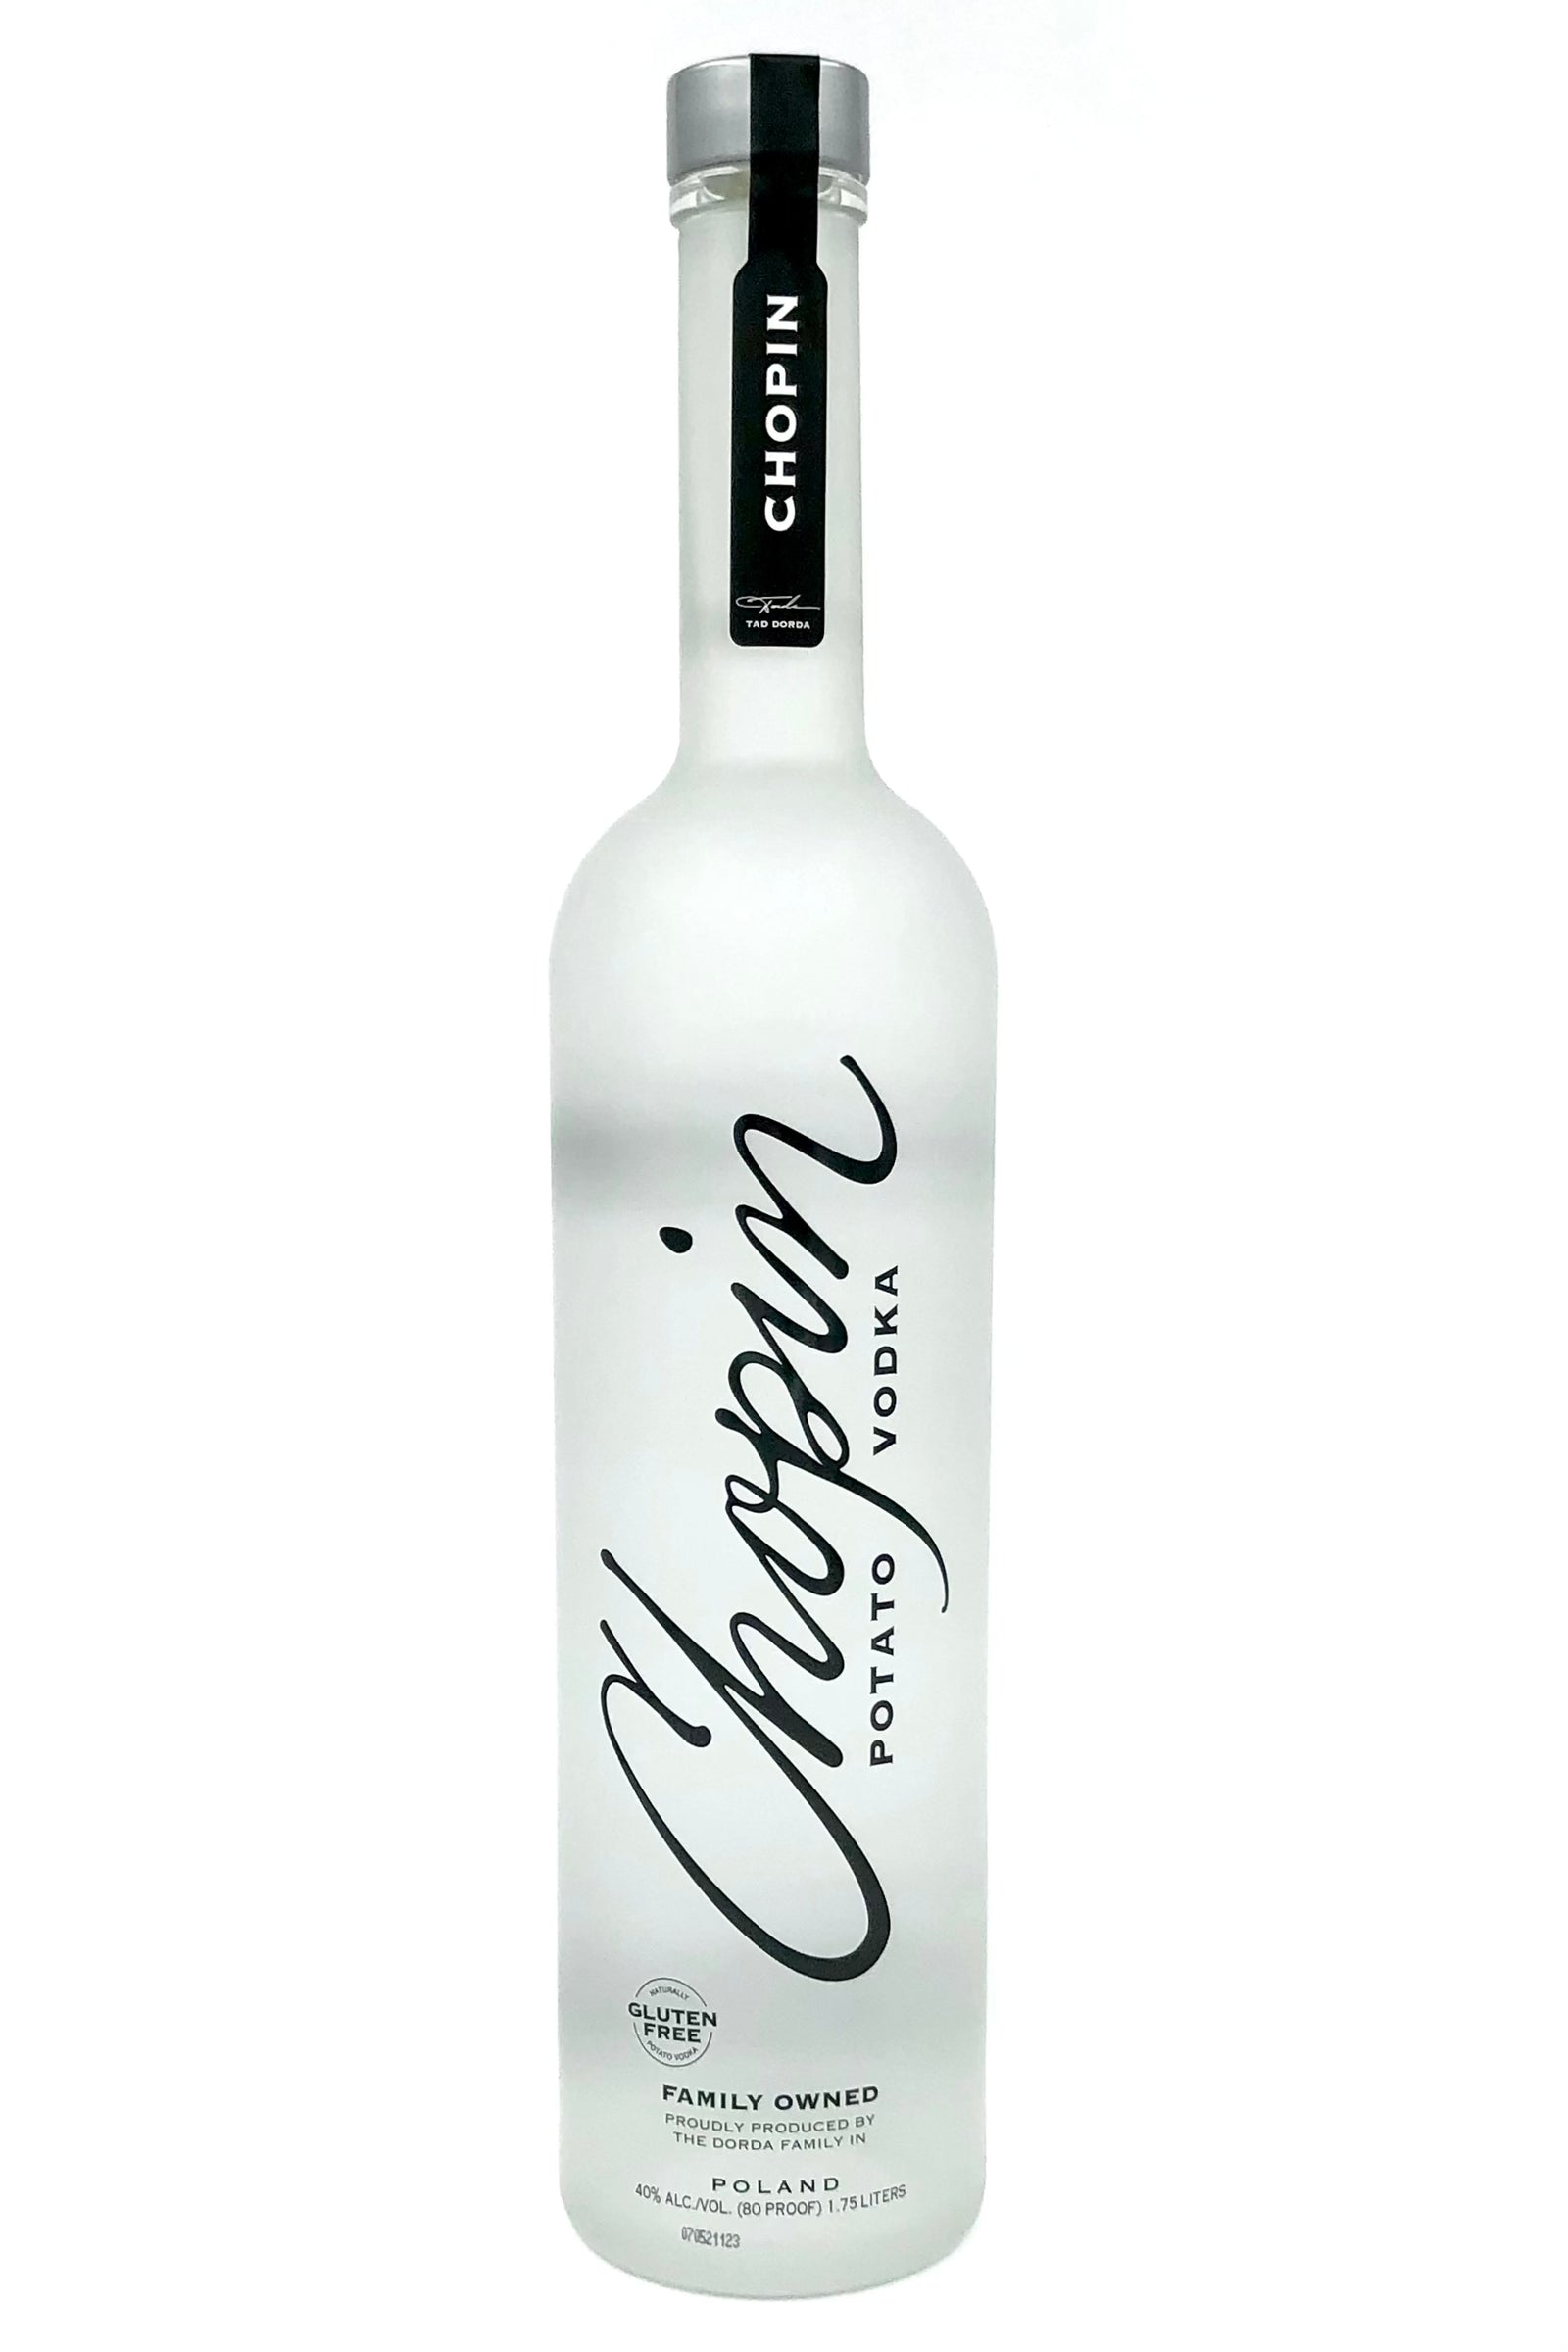 Grey Goose Night Vision Vodka 1000 ml Luminous - Blackwell's Wines &  Spirits